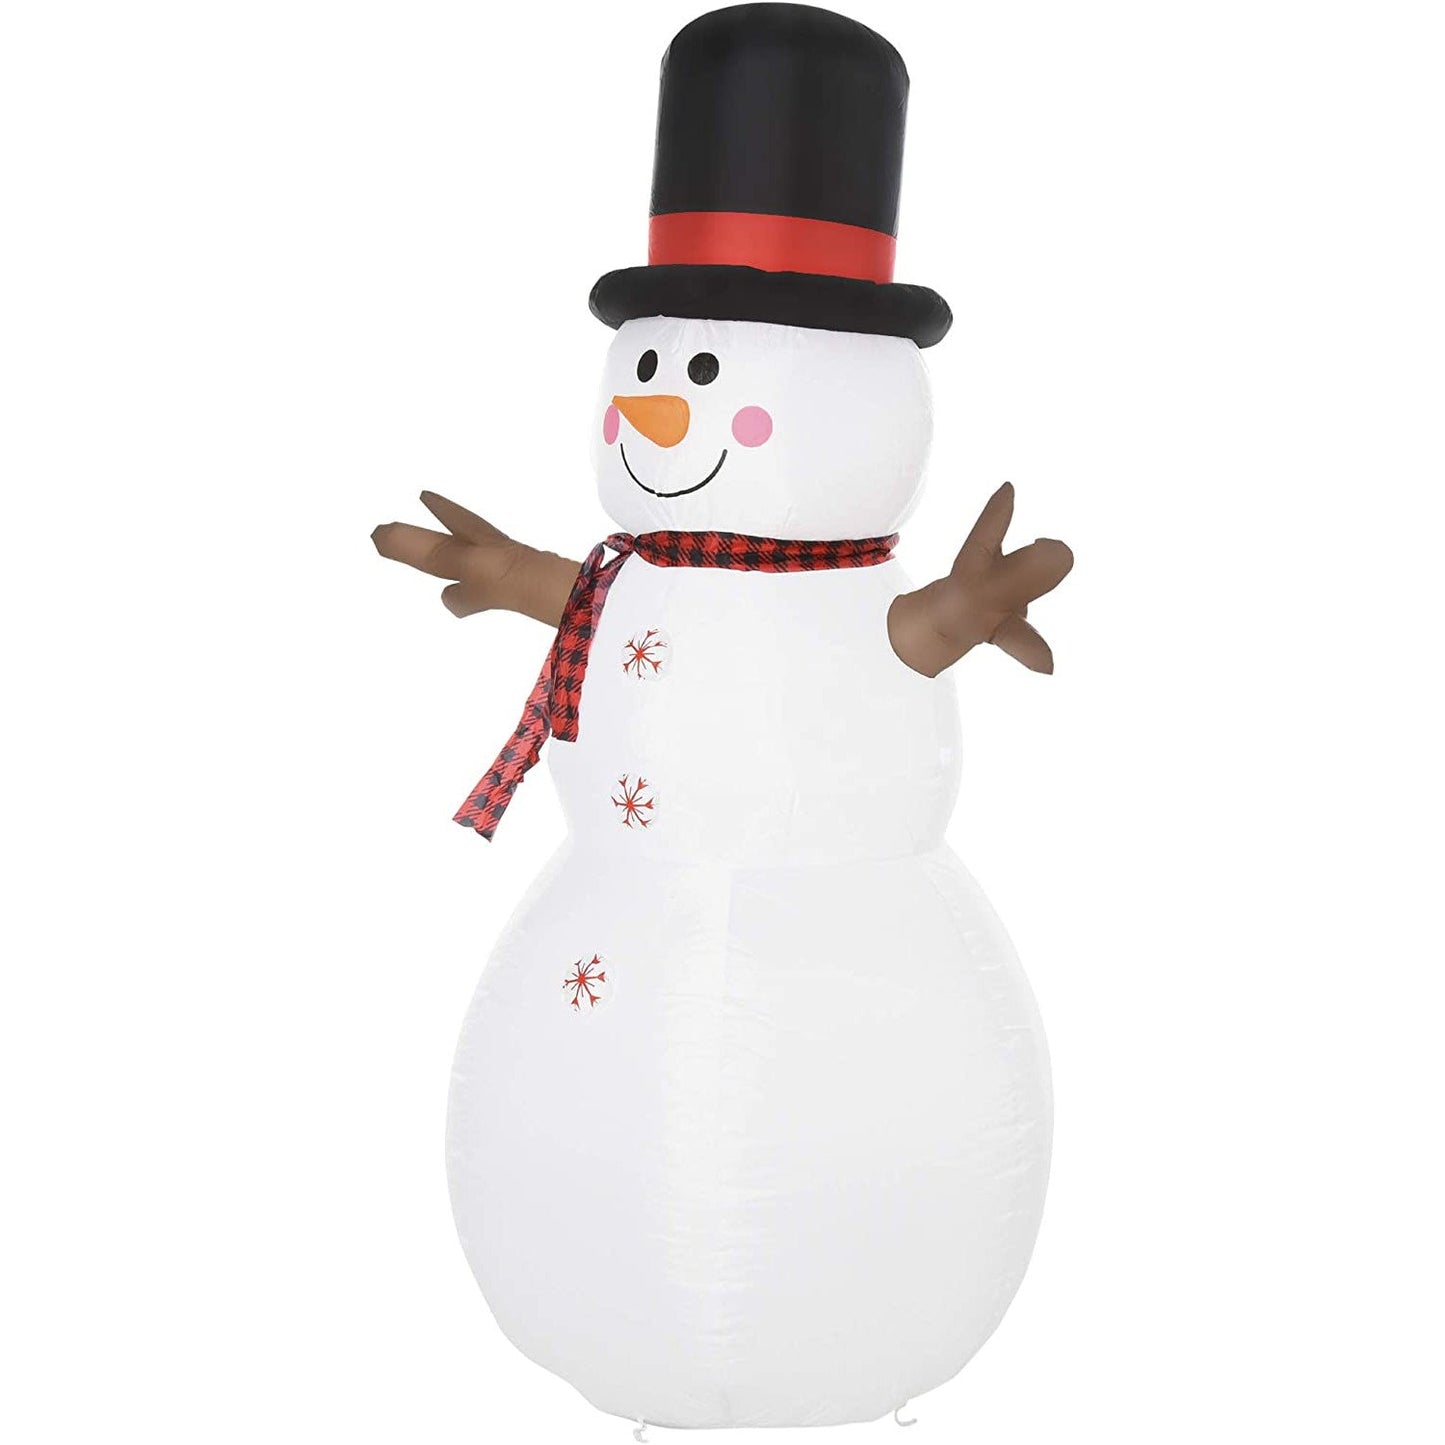 HOMCOM 6ft Giant LED Inflatable Snowman Christmas Outdoor Decoration - maplin.co.uk